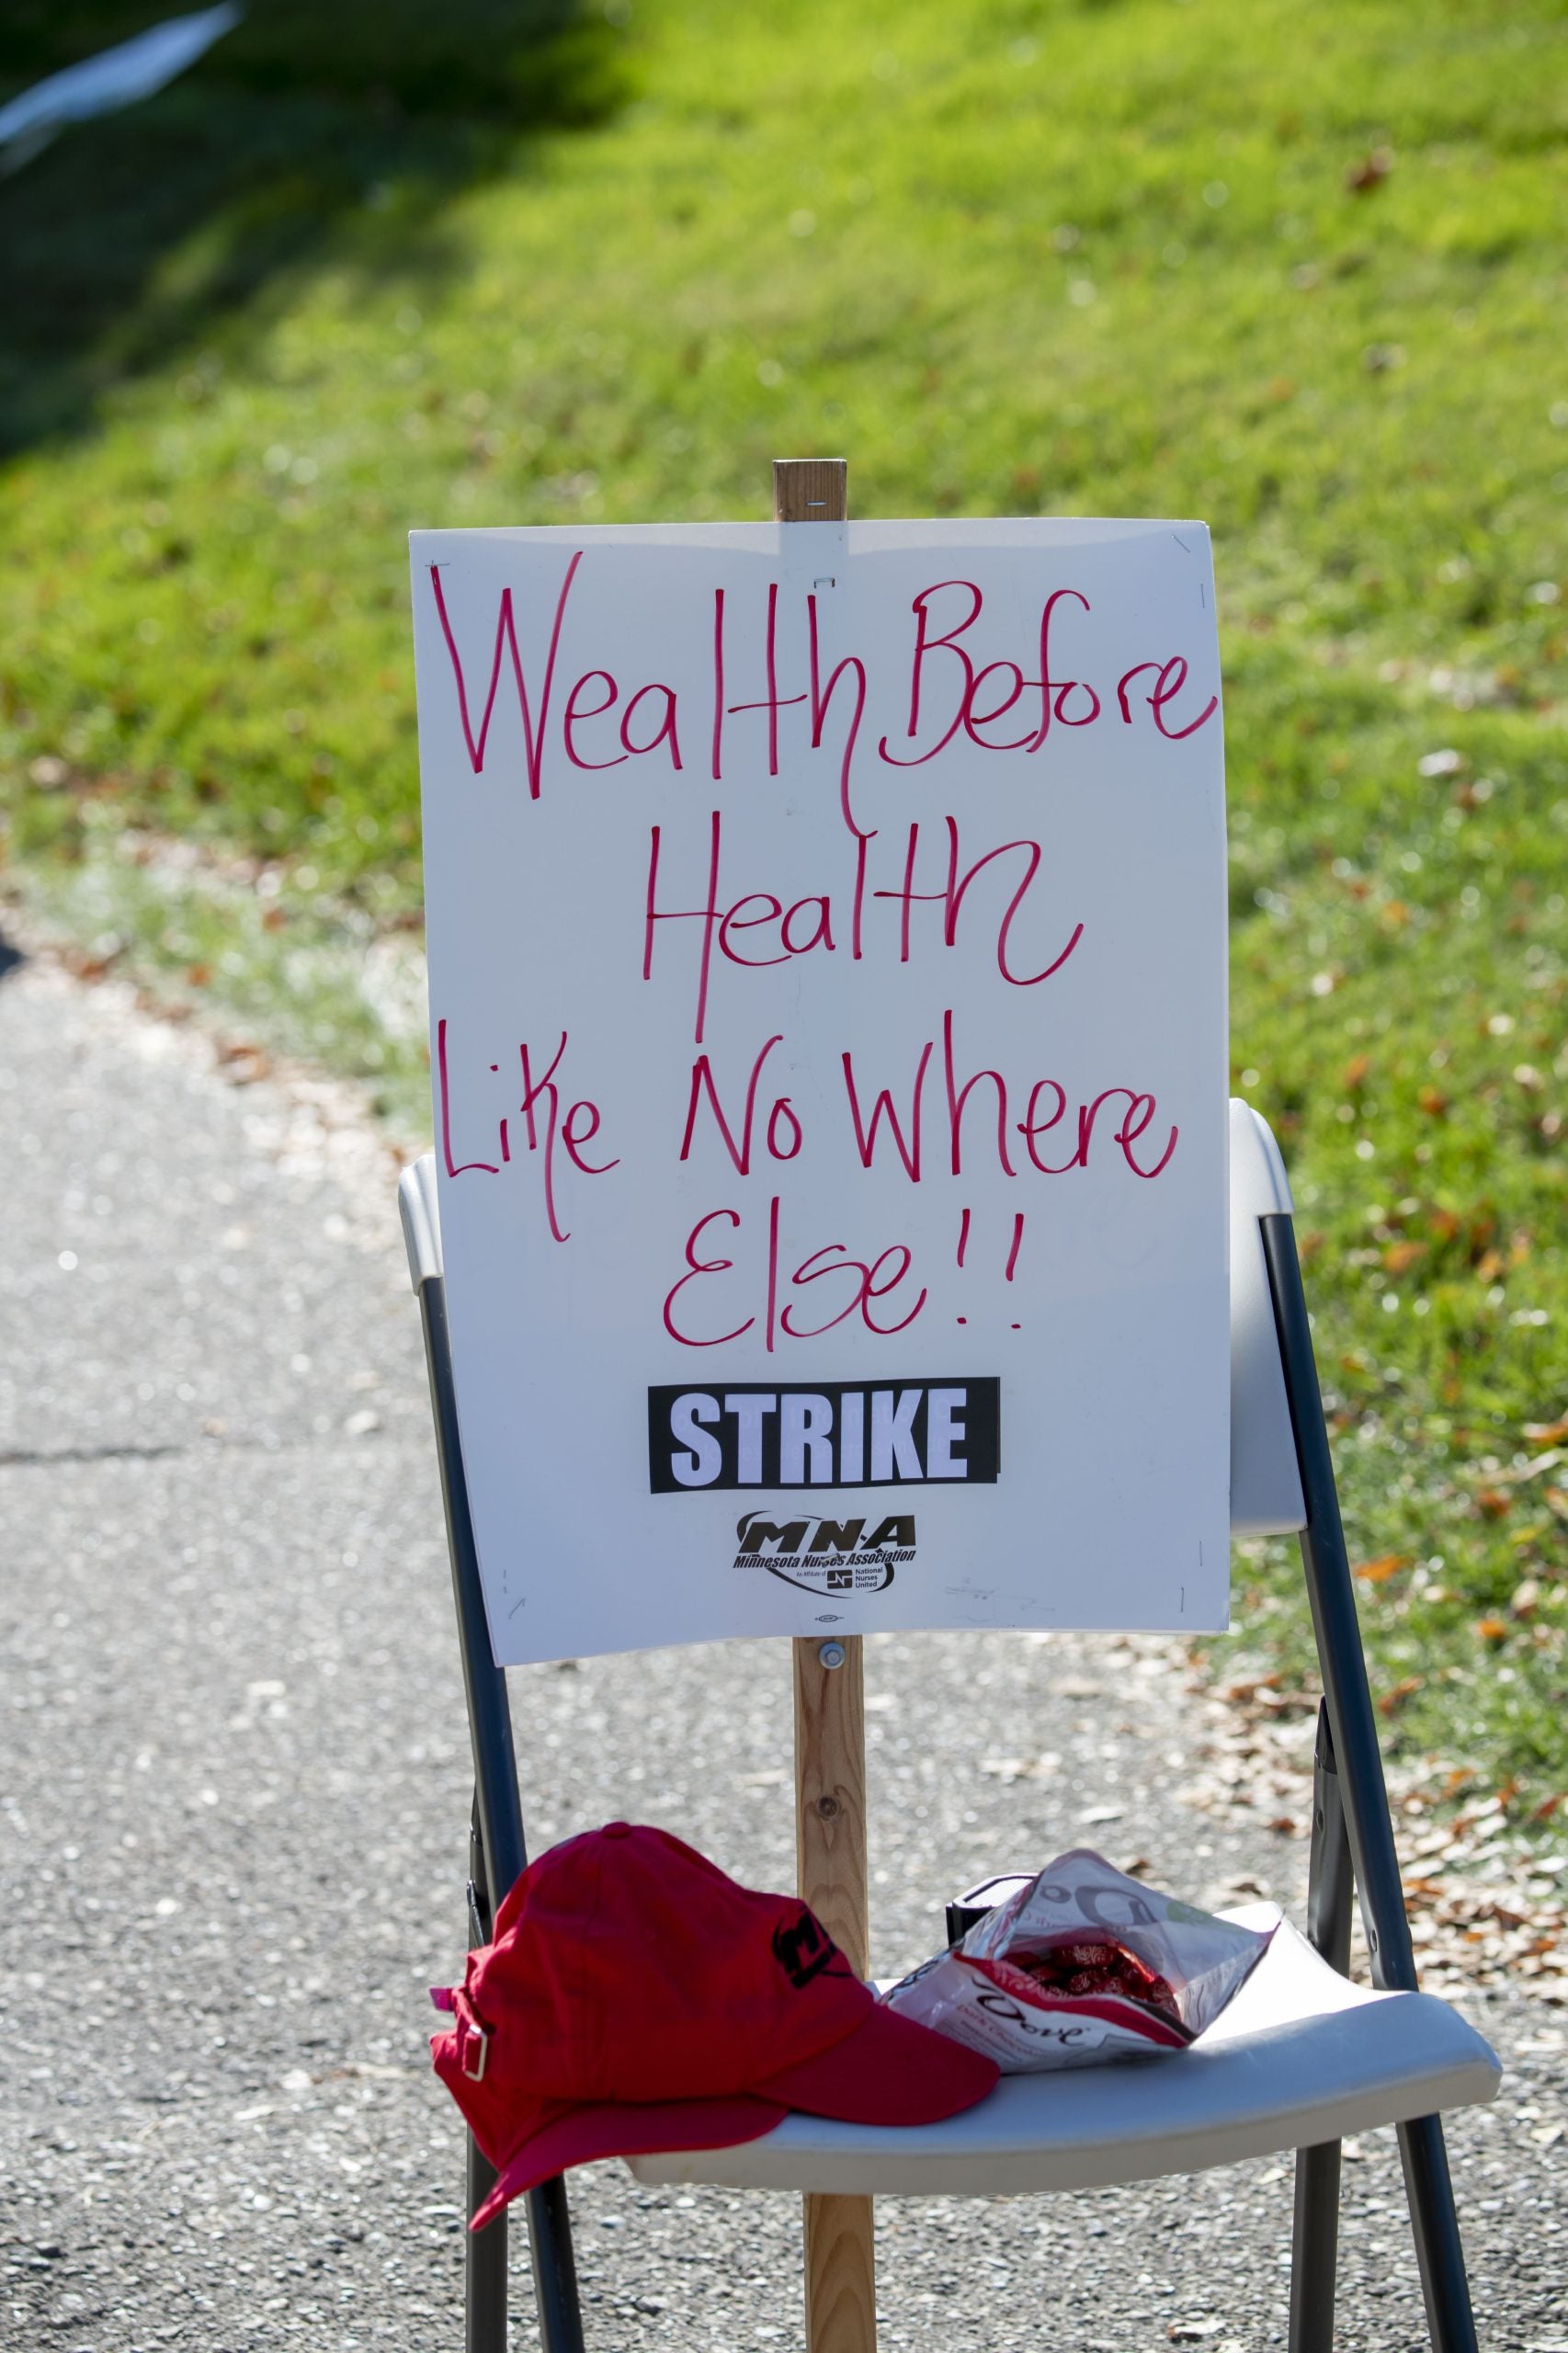 Some Minnesota Hospitals Reportedly Dismissed Concerns Of Nurses Of Color Amid Plans For Historic Strike